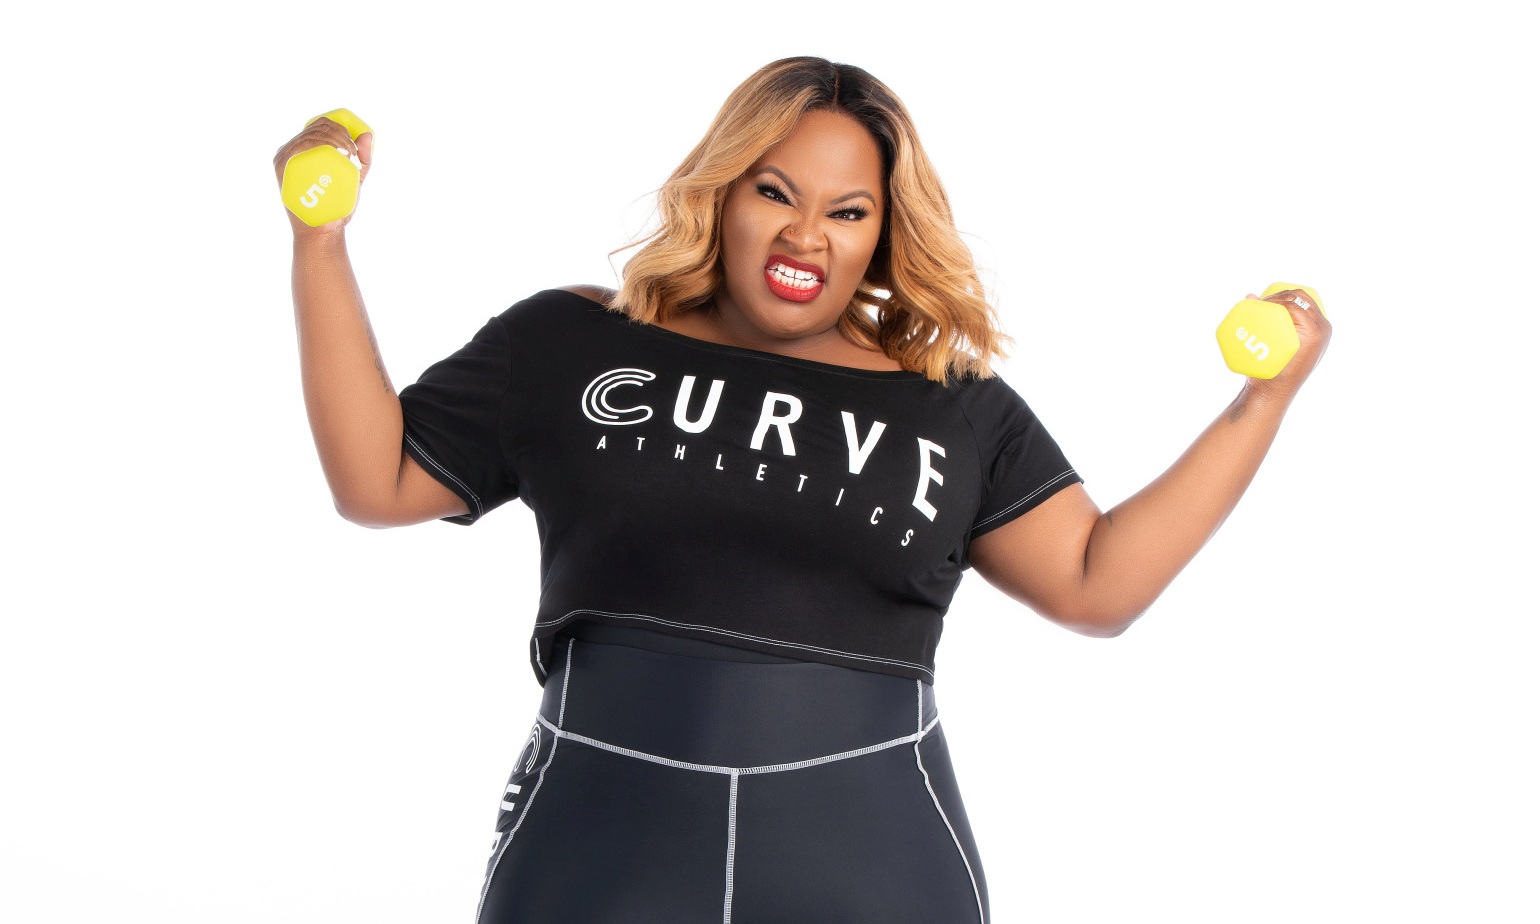 Tasha Cobbs Leonard Launches New Clothing Line “Curve Athletics” 